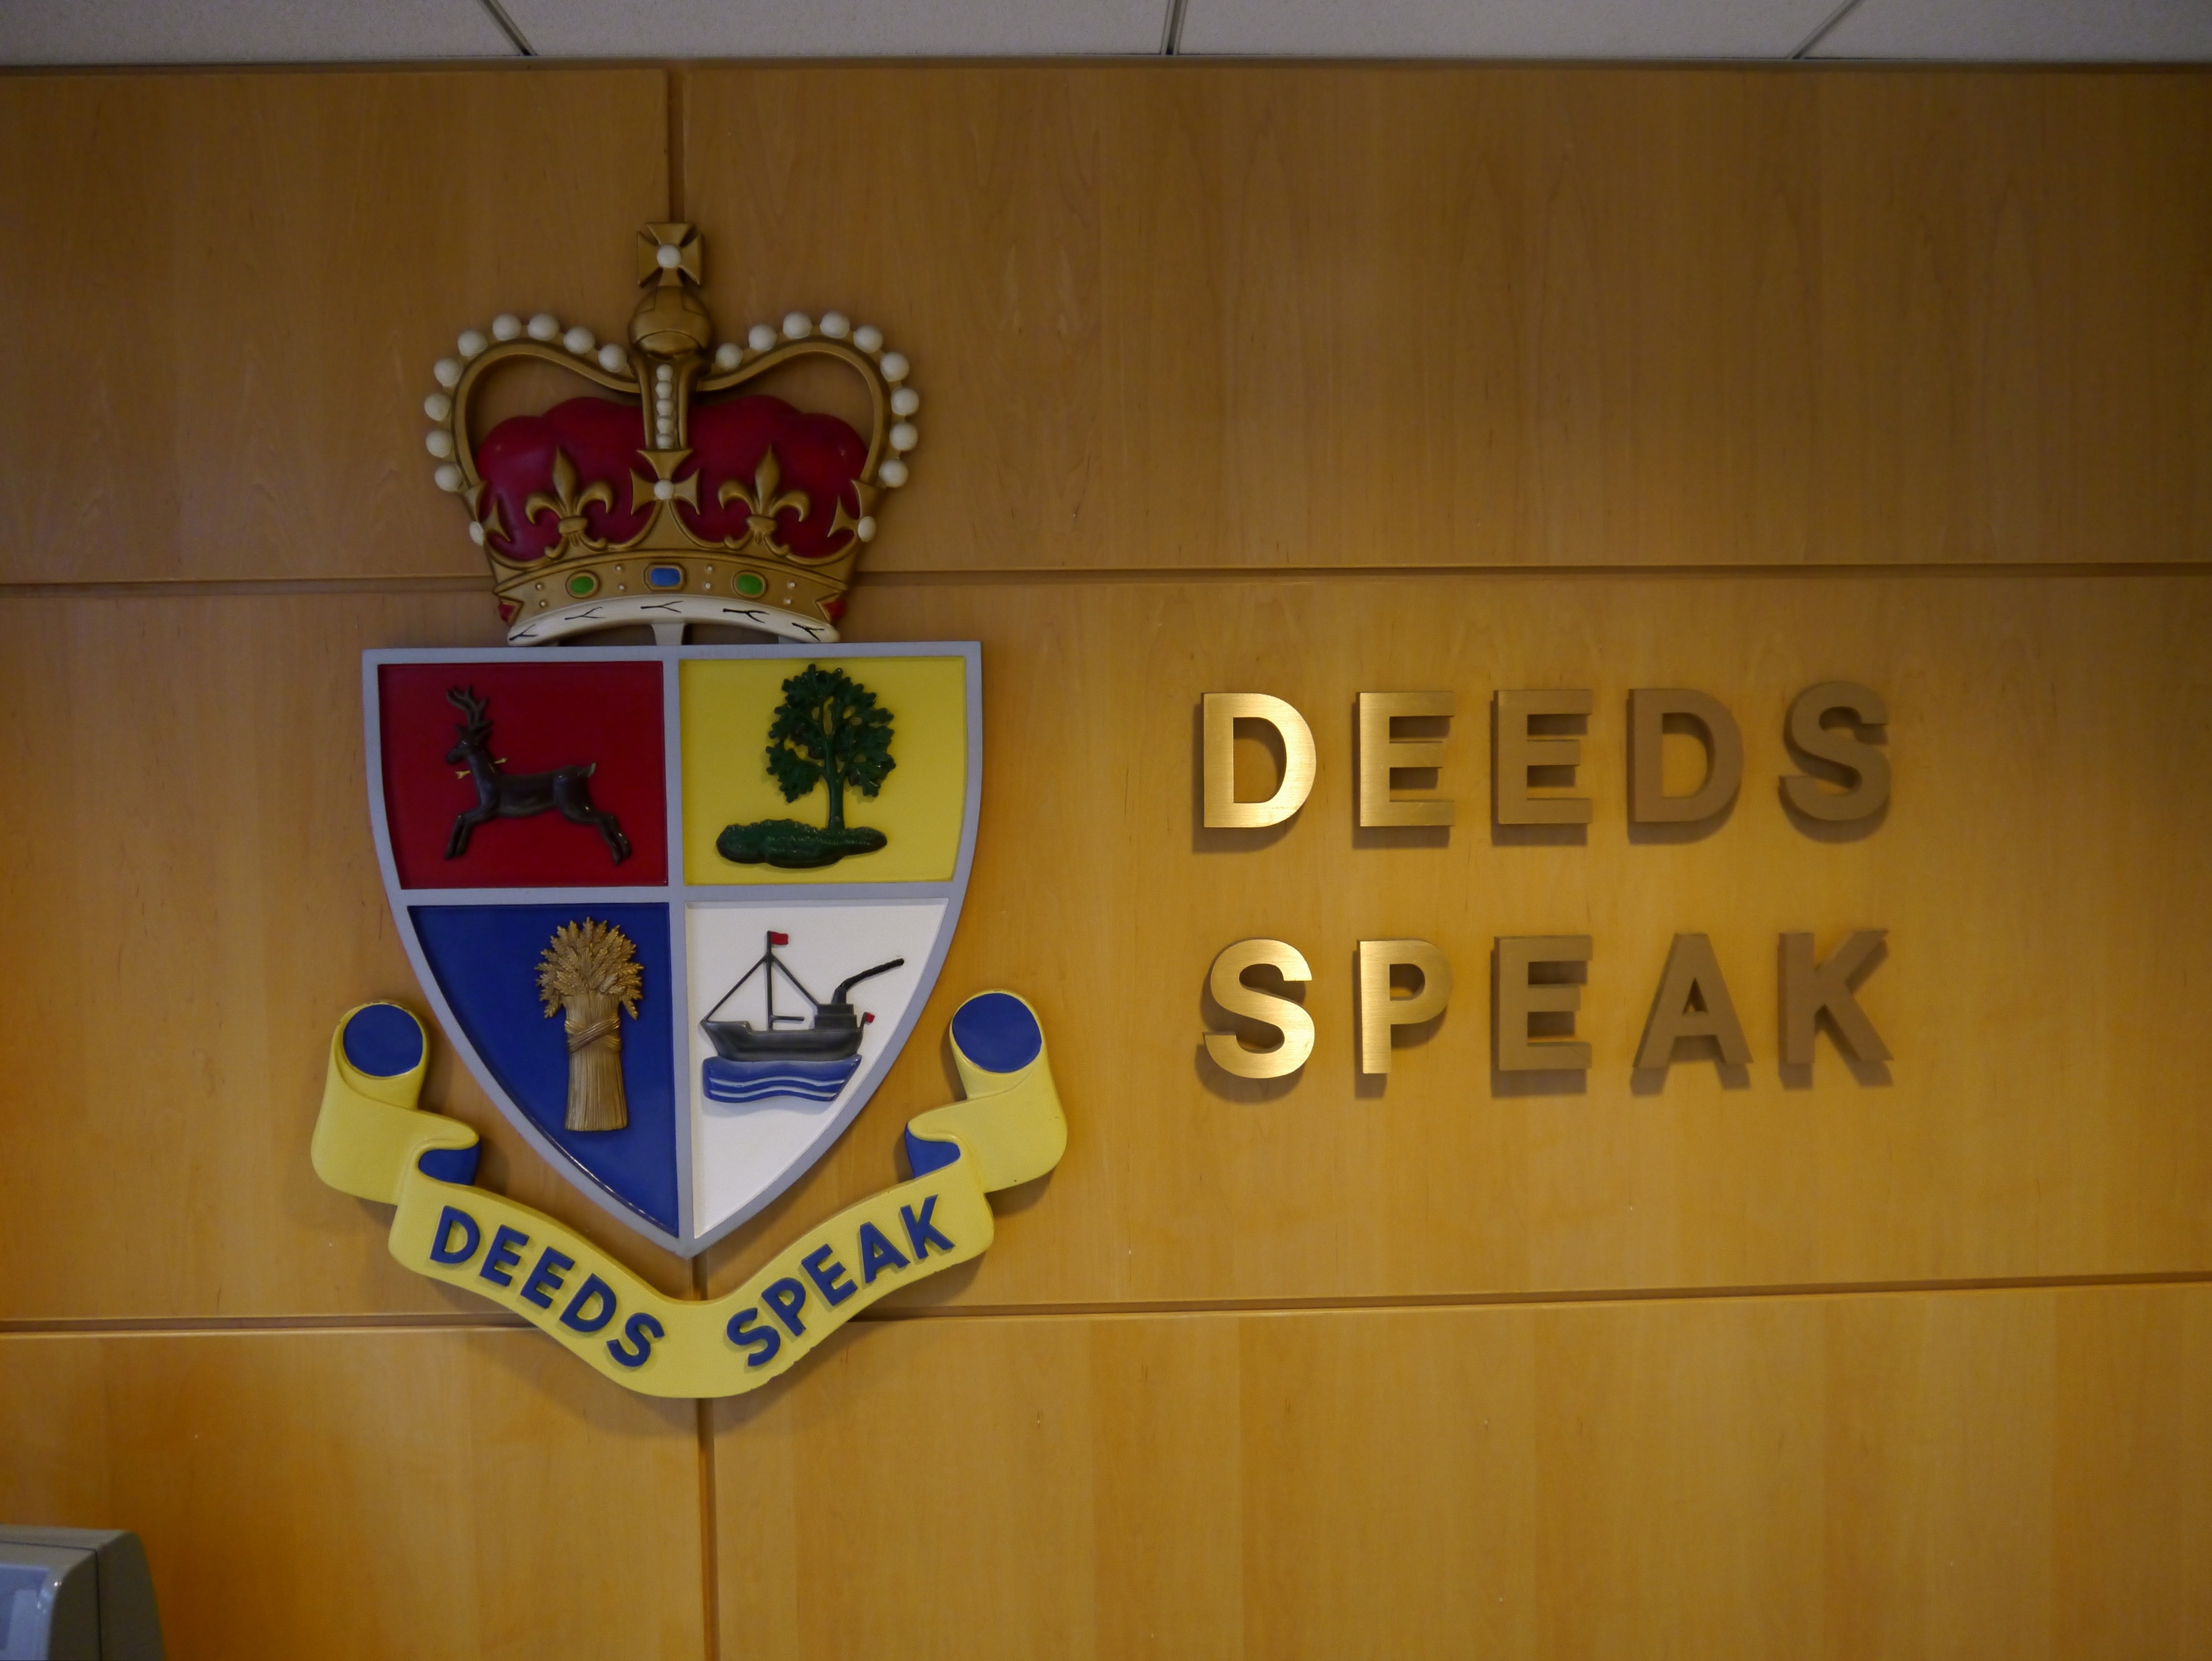 York Regional Police signage - Deeds Speek